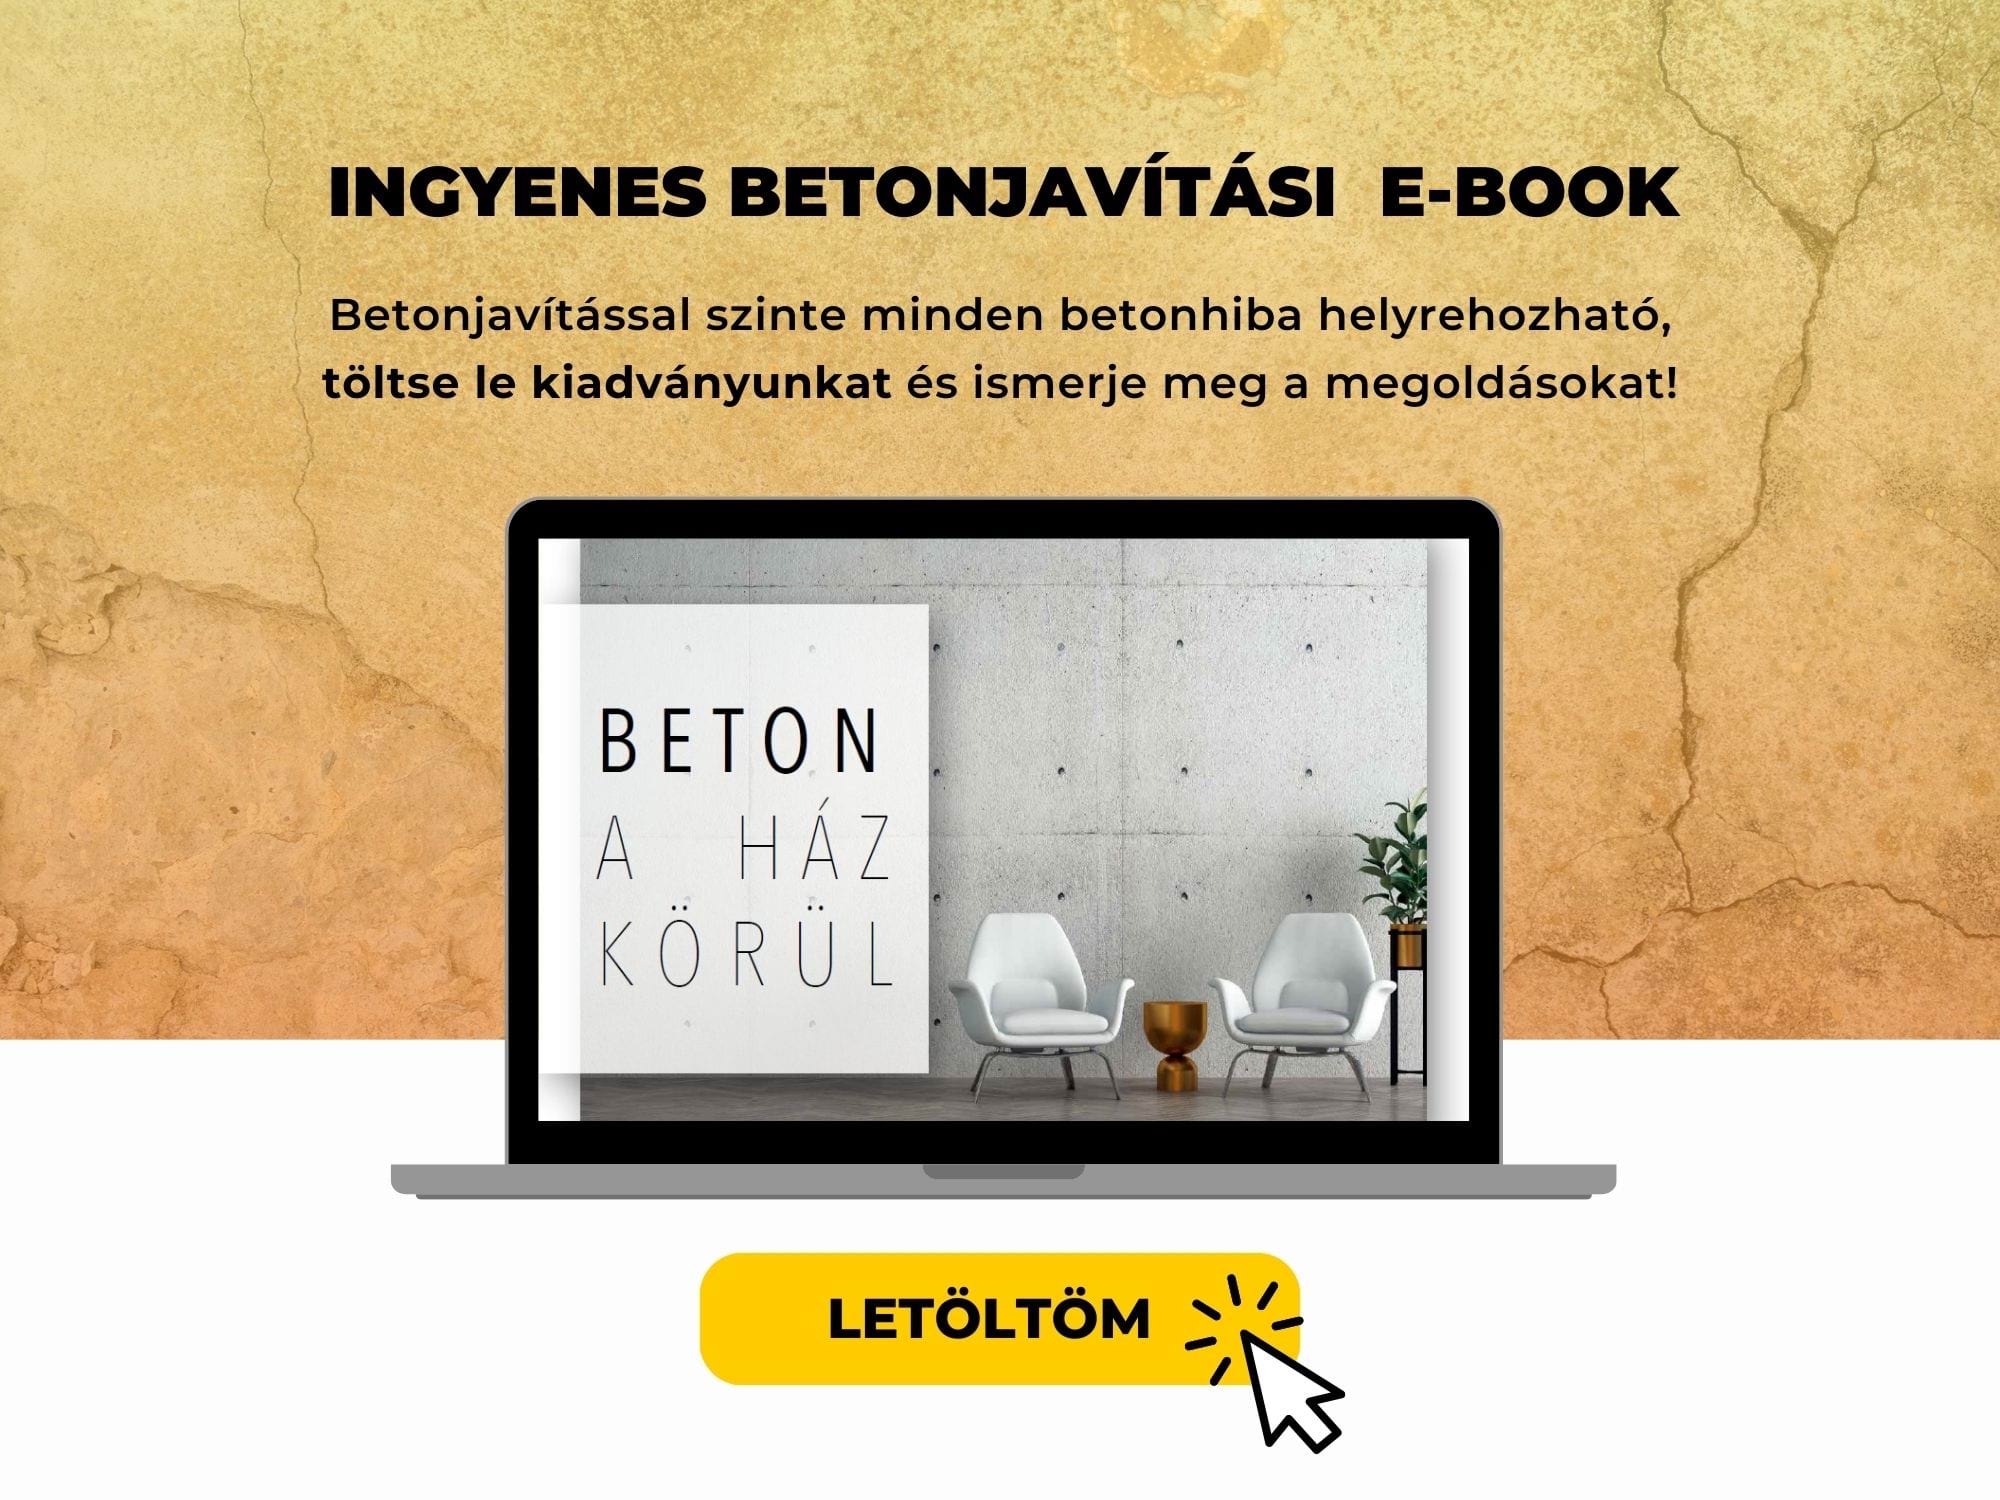 Betonjavitasi e-book banner